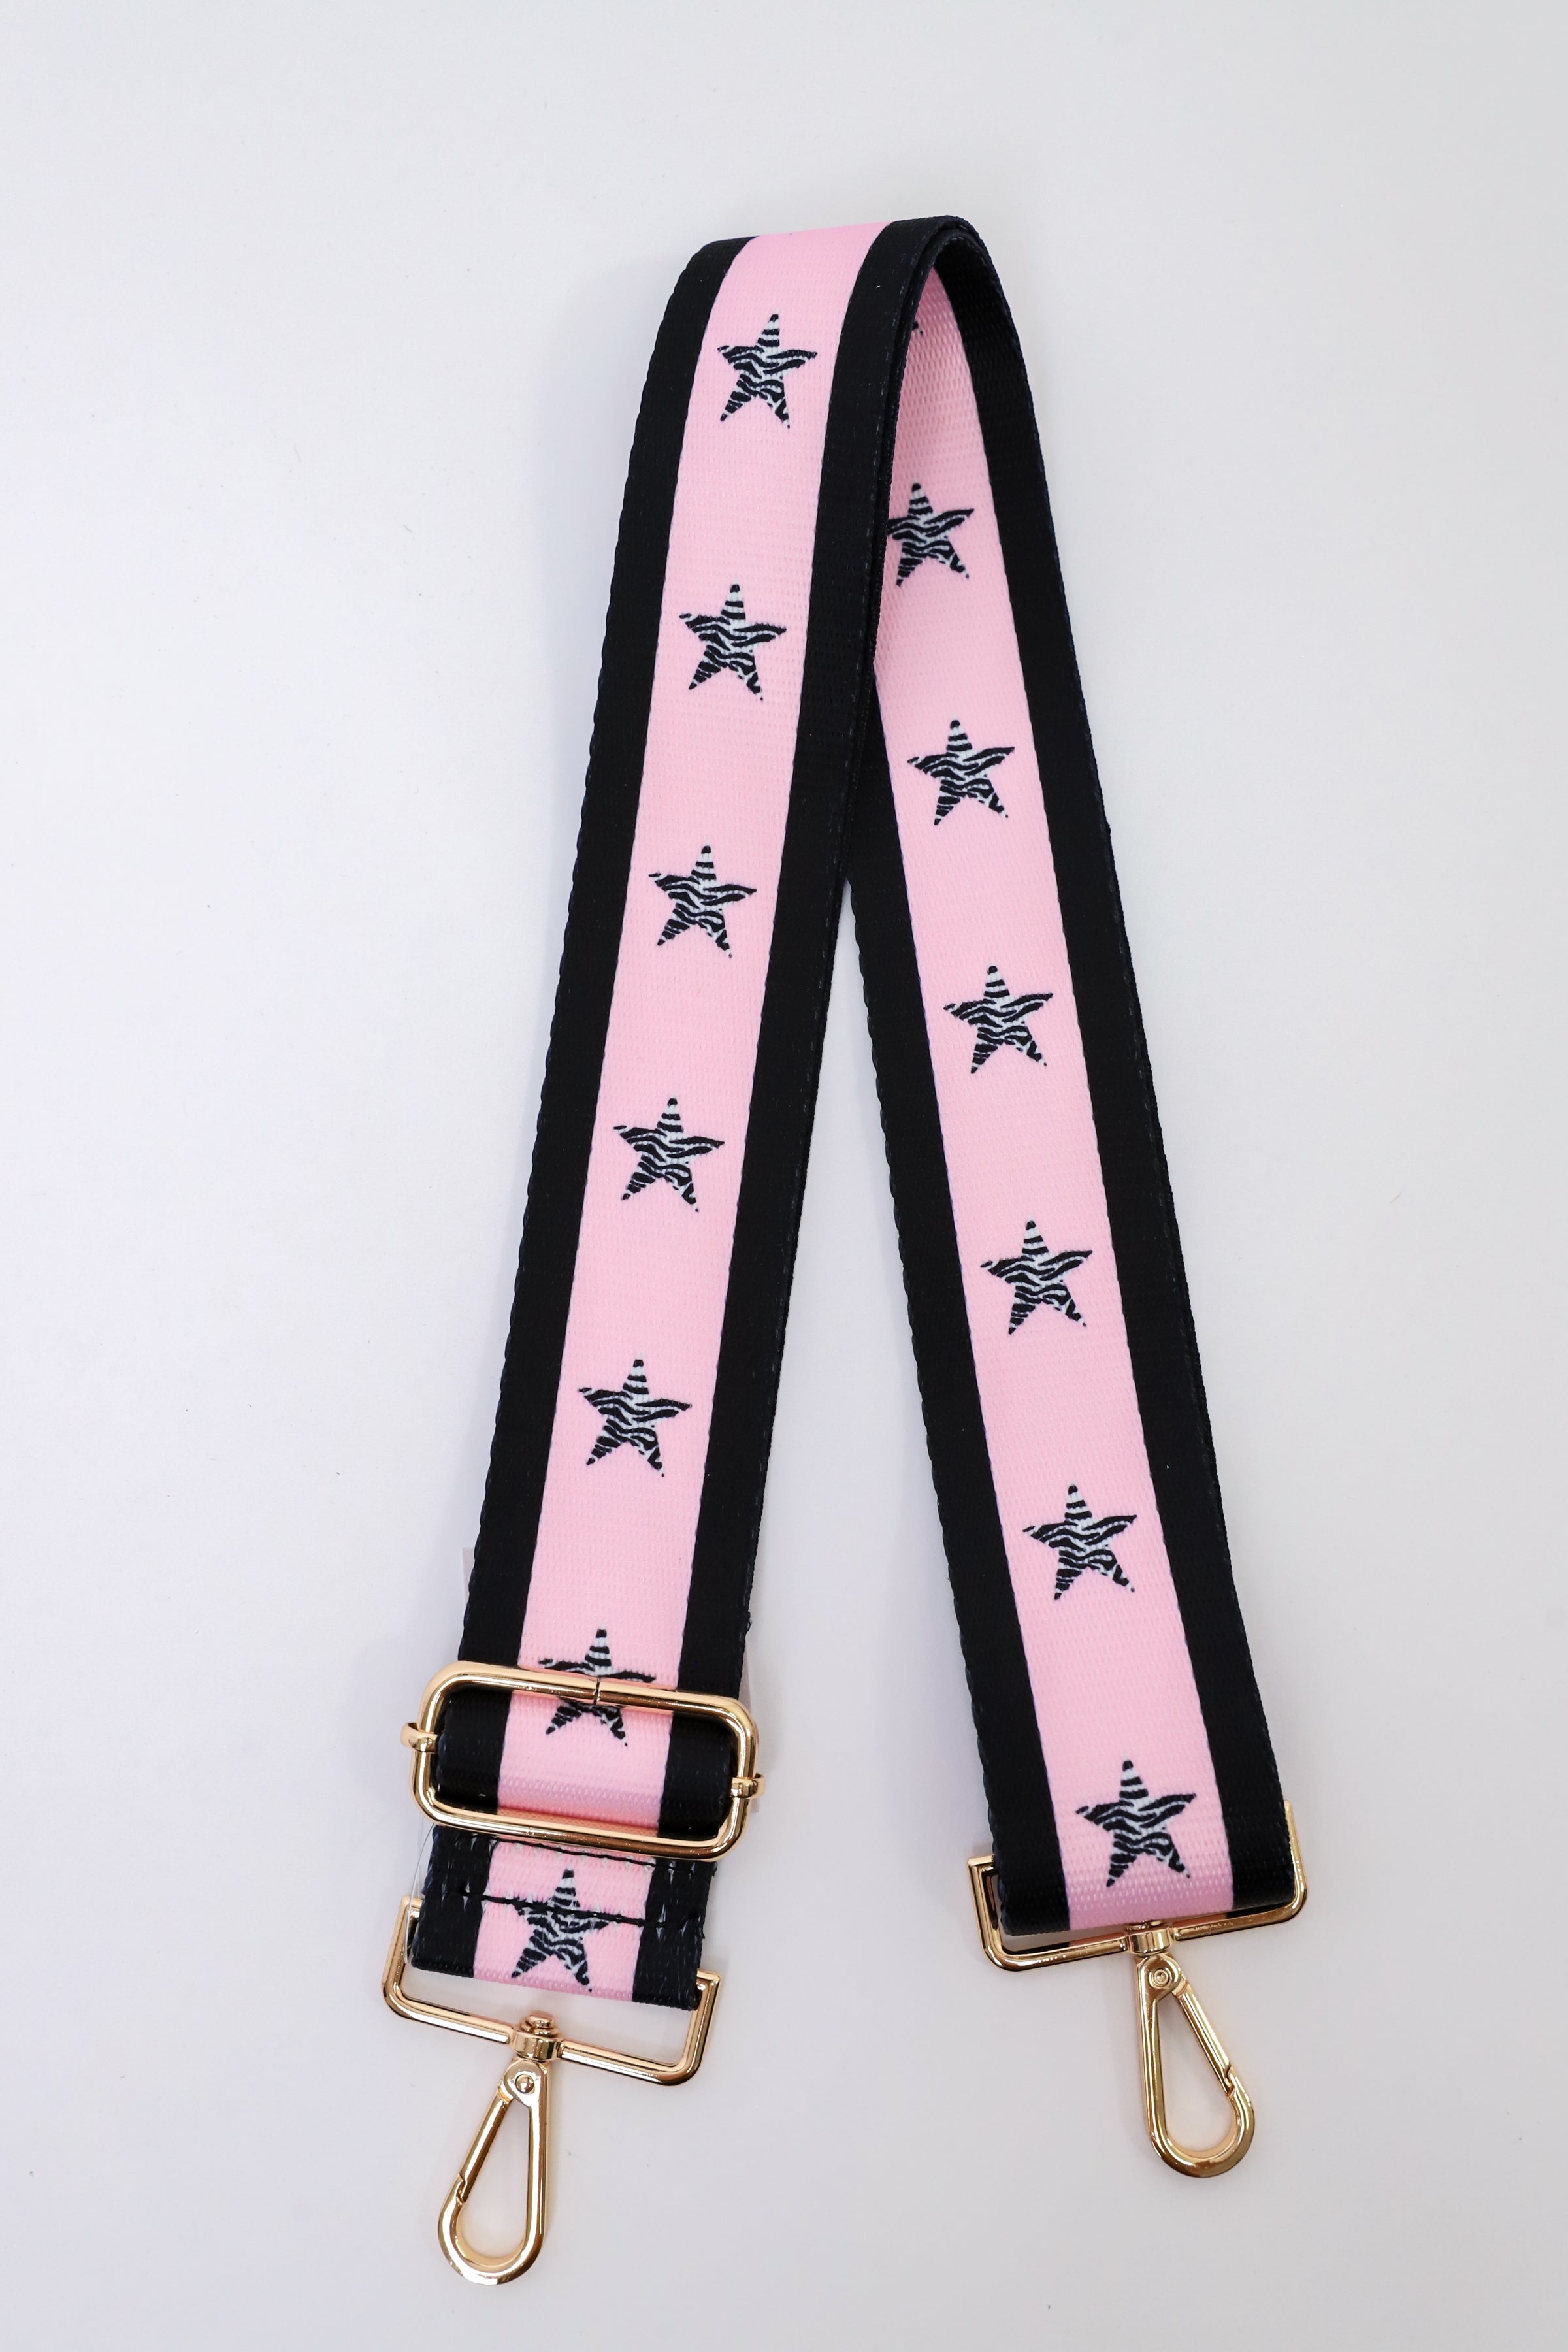 Stars + Stripes Black + Light Pink Bag Strap